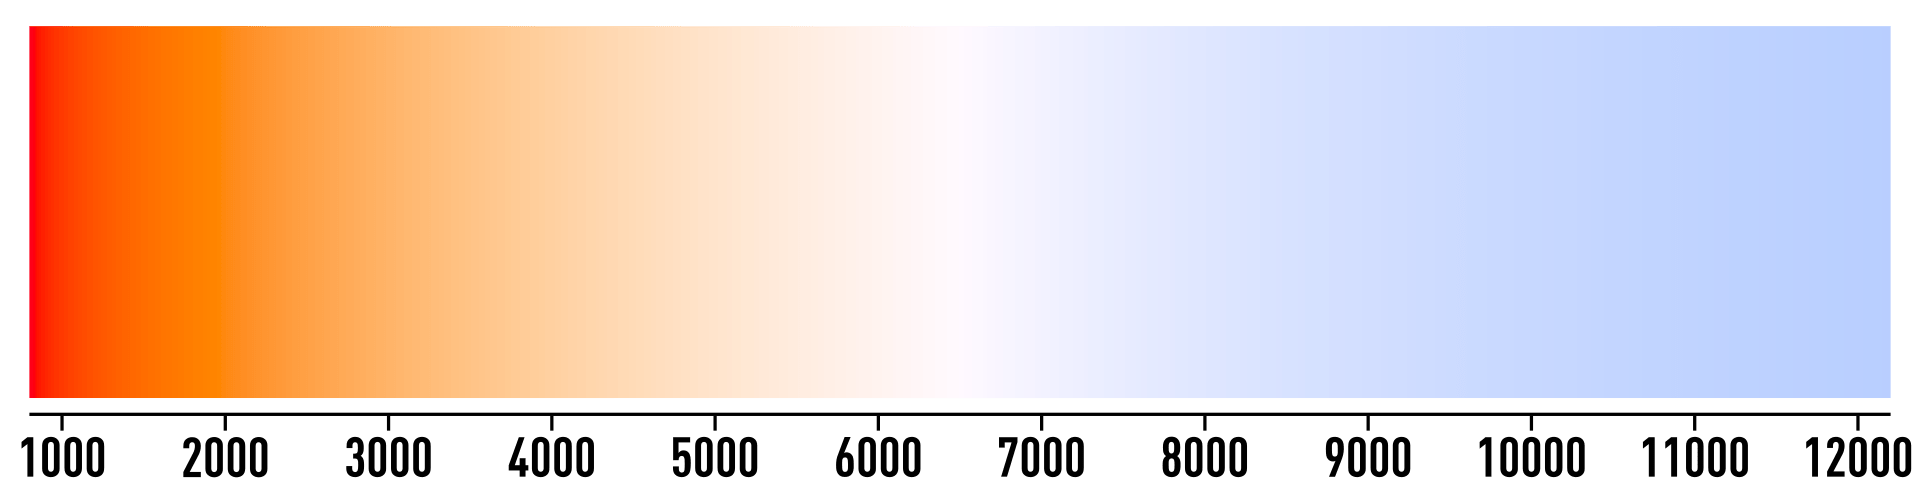 Temperatura barwowa - Balans Bieli